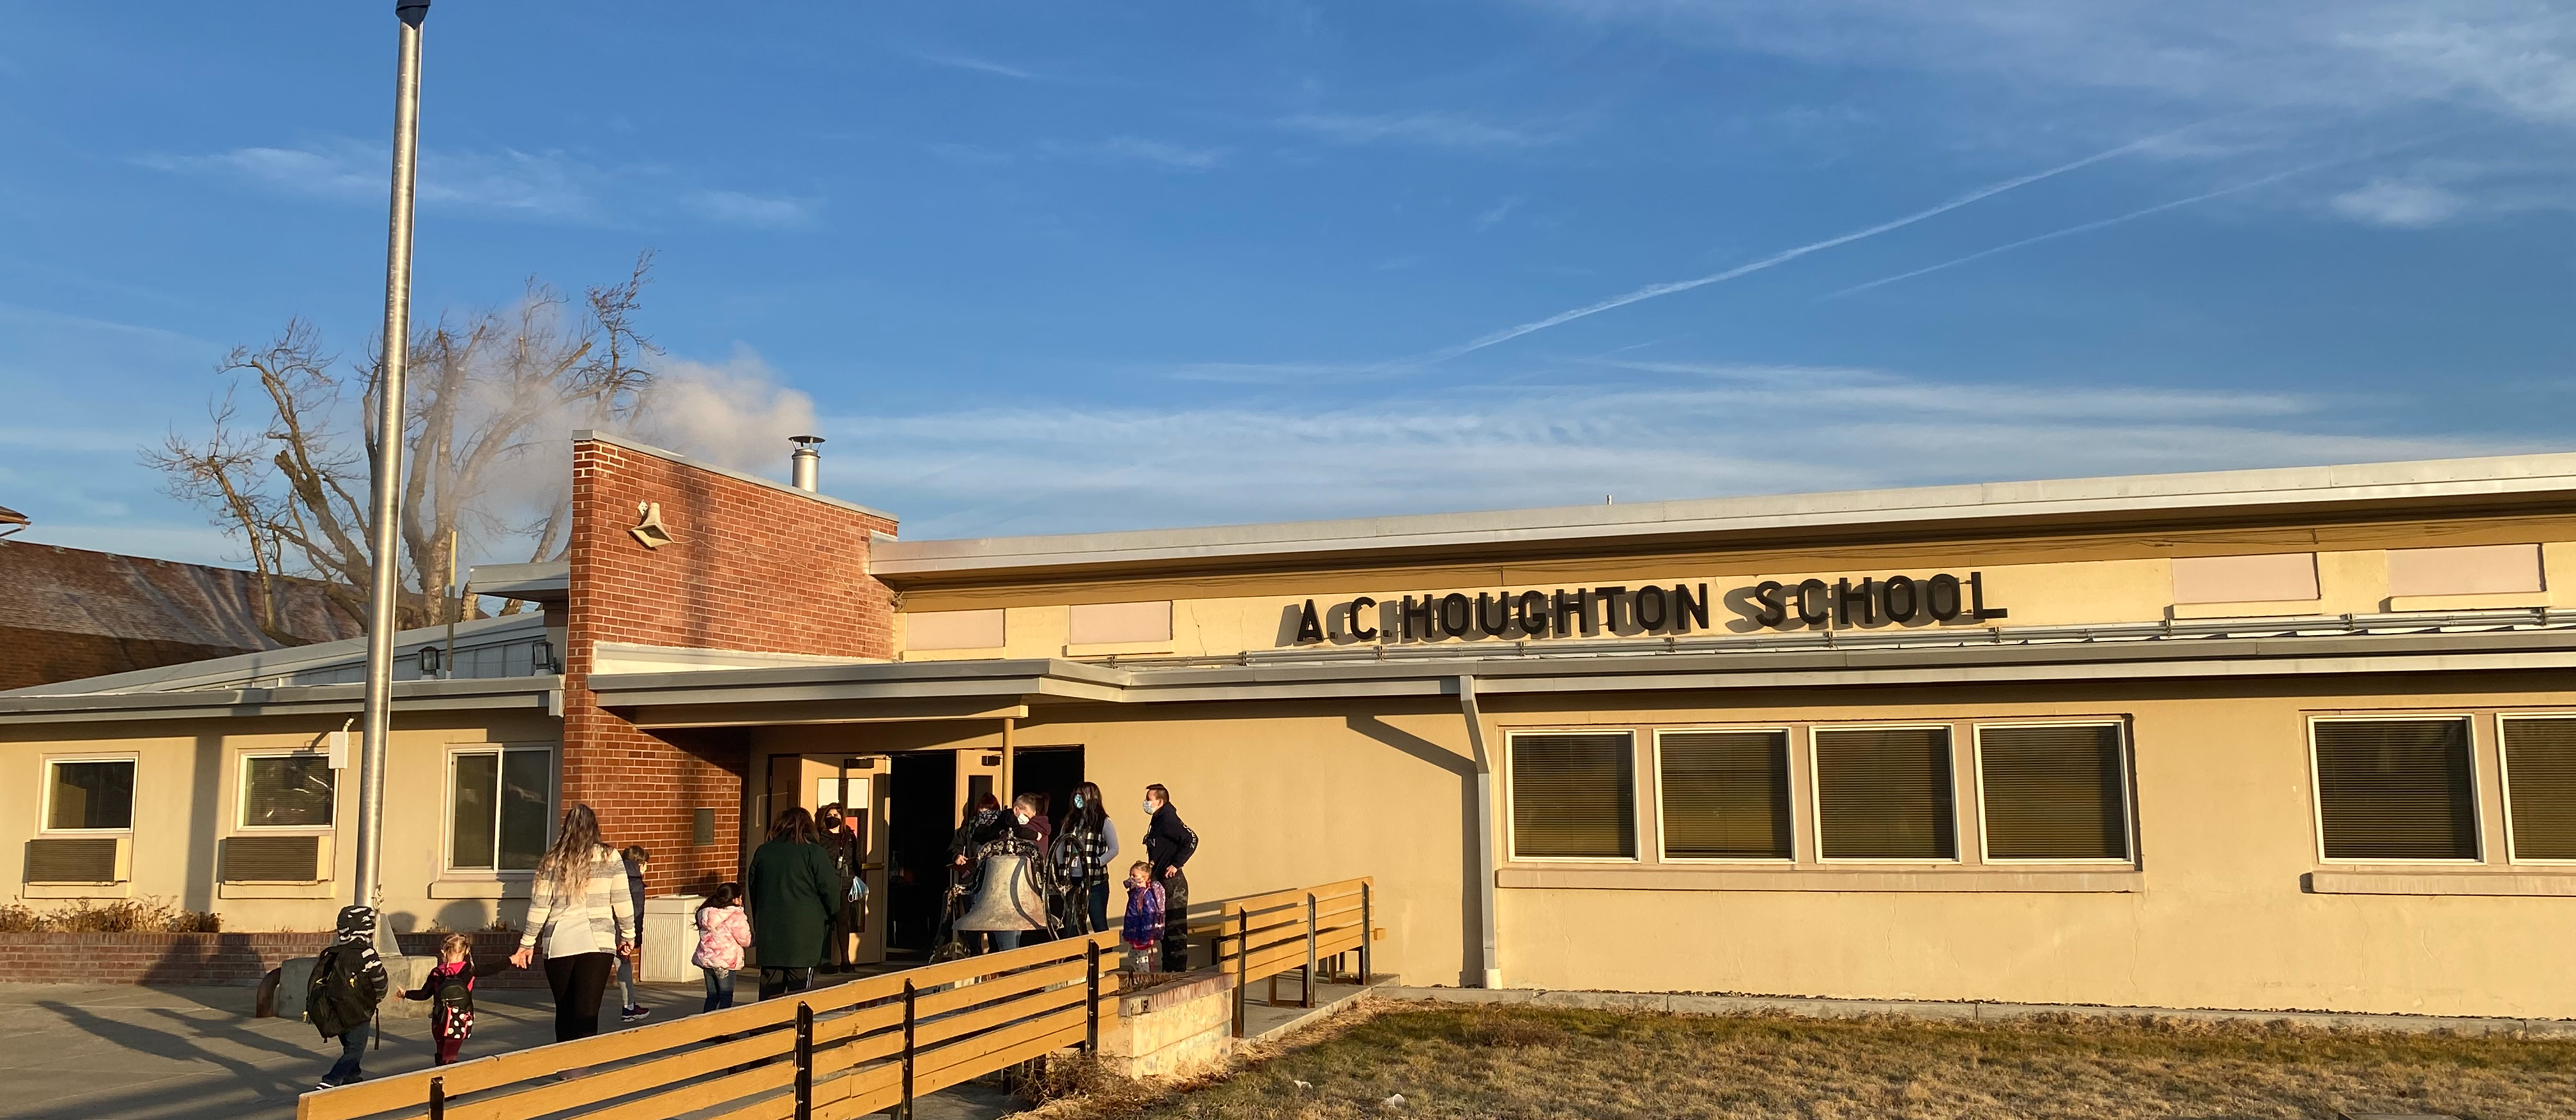 AC Houghton School